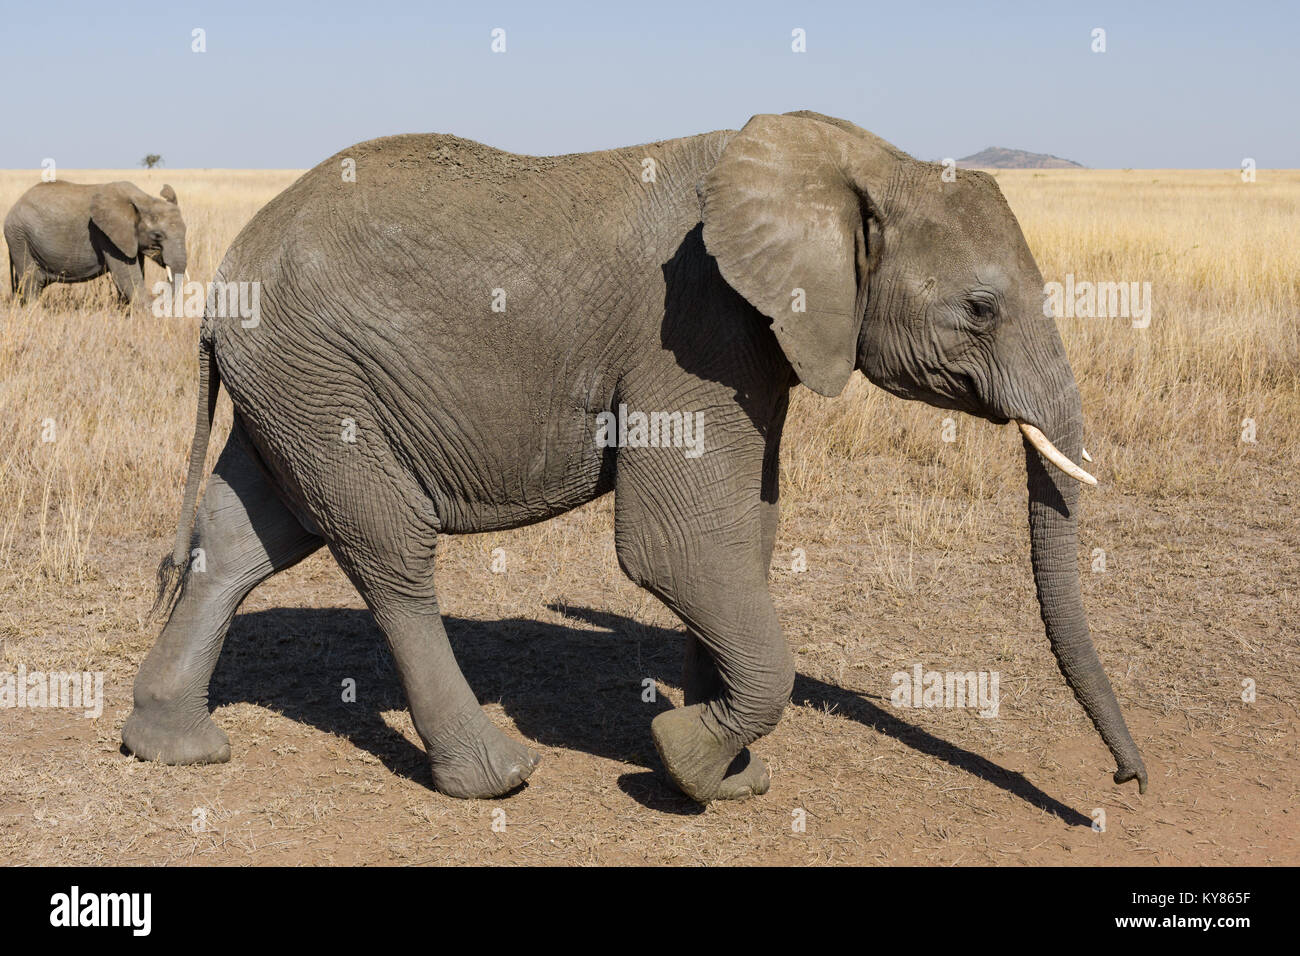 Marching elephant profile portrait, savanna grass, October 2017, Serengeti National Park, Tanzania, Africa Stock Photo